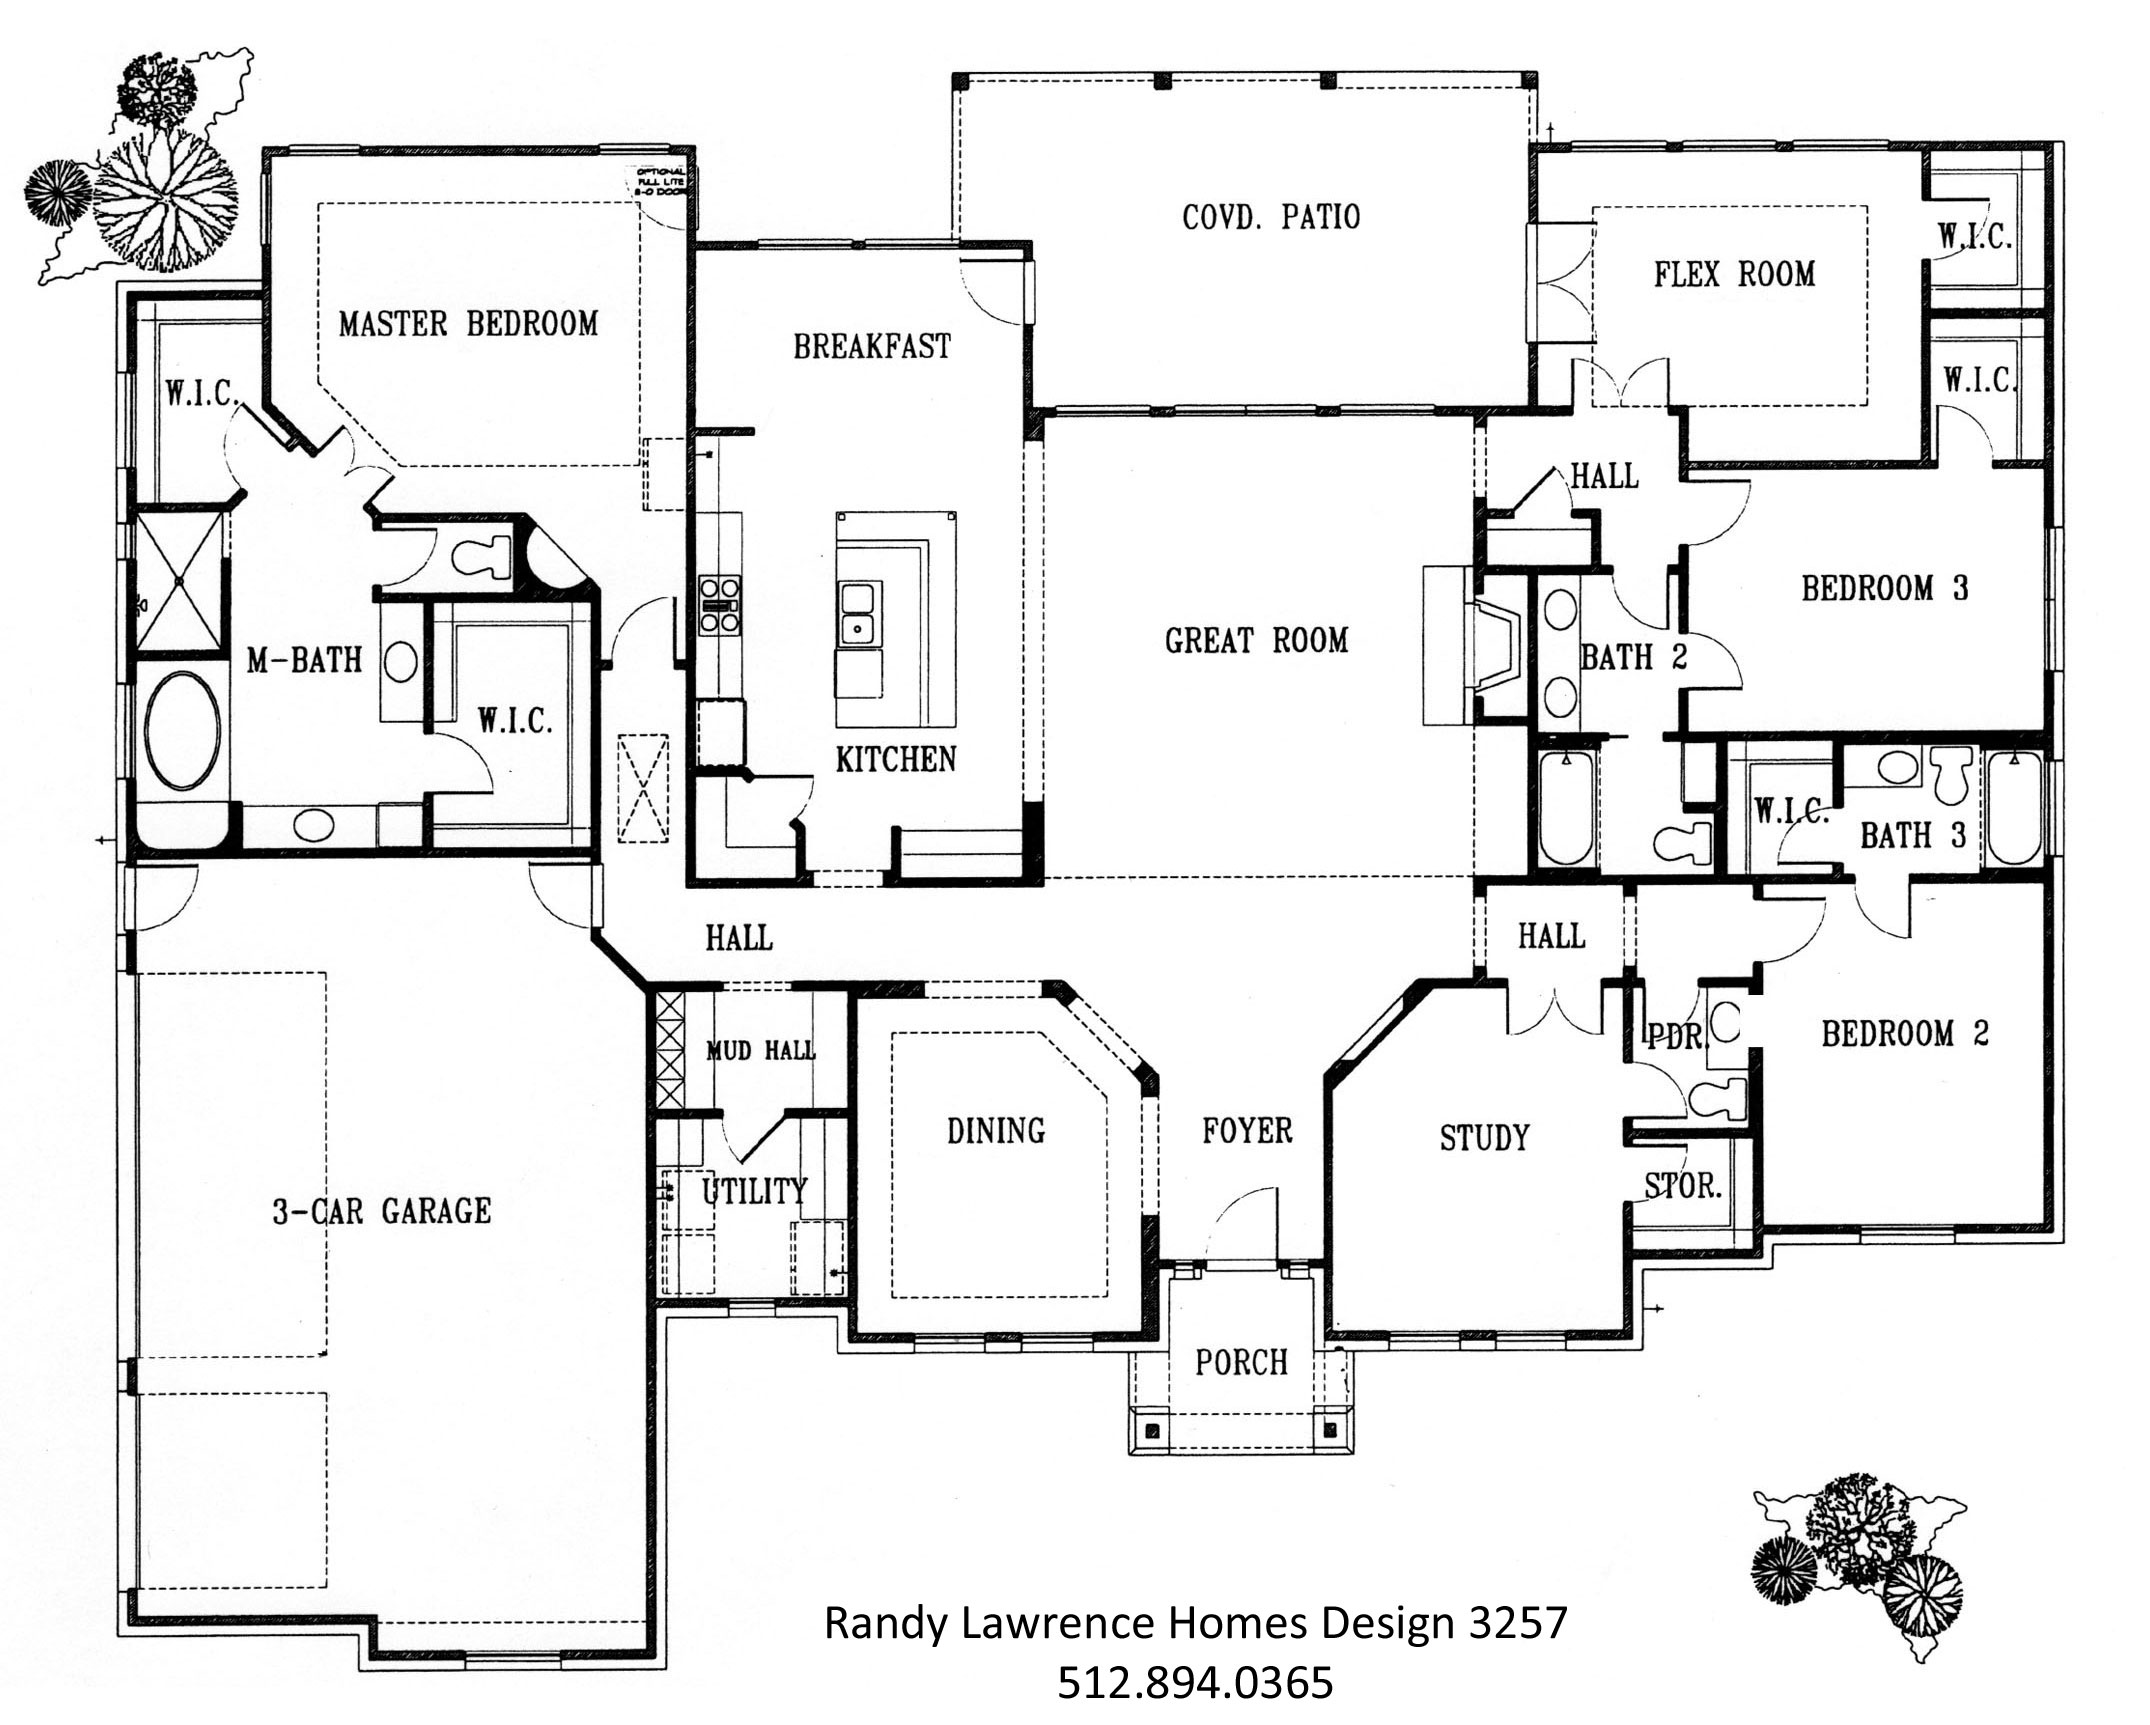 Floor Plans | Randy Lawrence Homes
